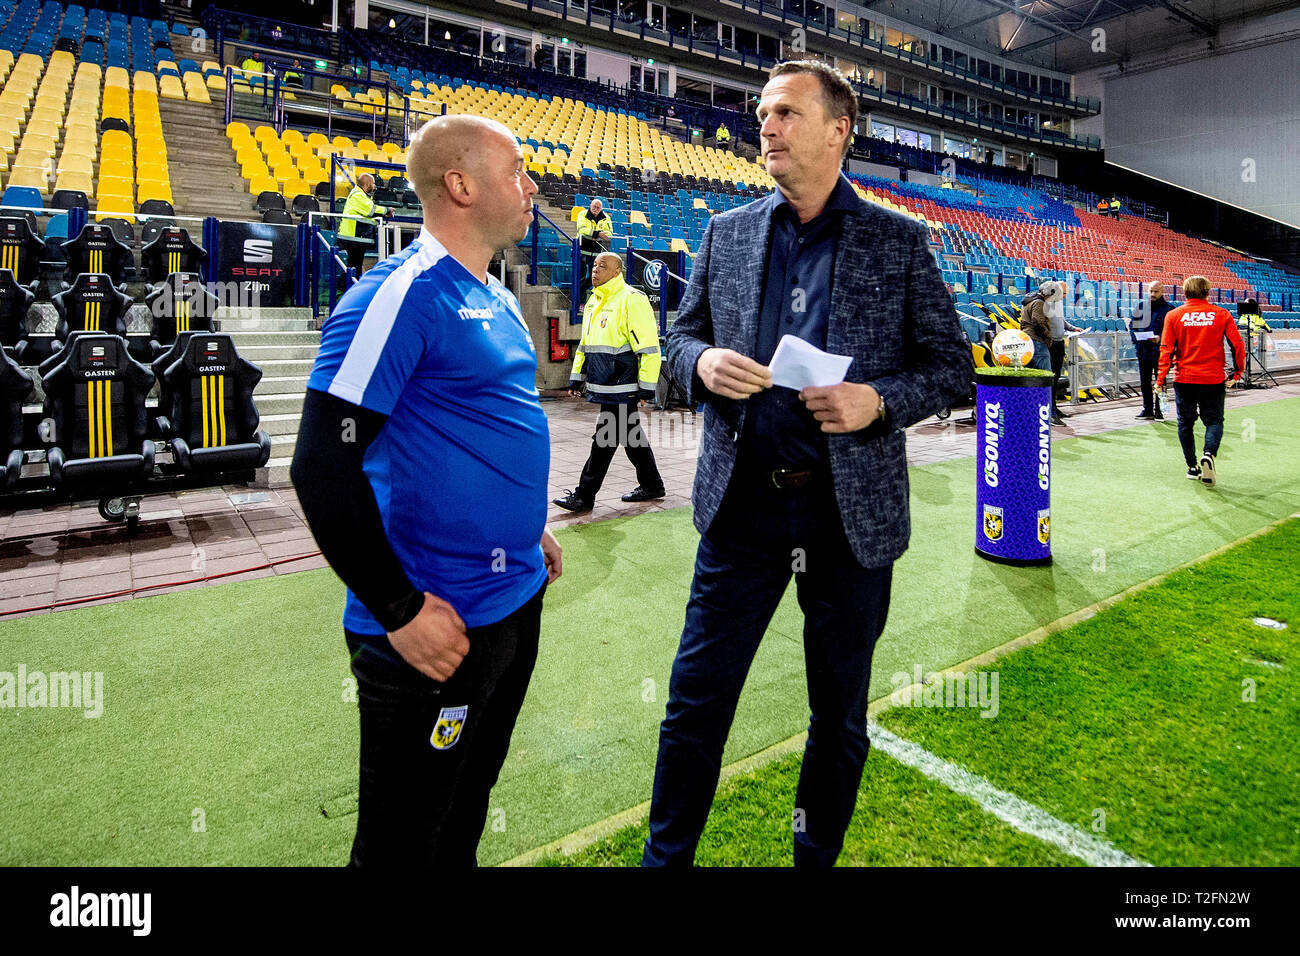 ARNHEM, 02-04-2019, GelreDome, stagione 2018 / 2019, Vitesse assistente allenatore Nick Hofs parlando a AZ Den Haag coach John van den Brom prima della partita Vitesse - AZ Foto Stock